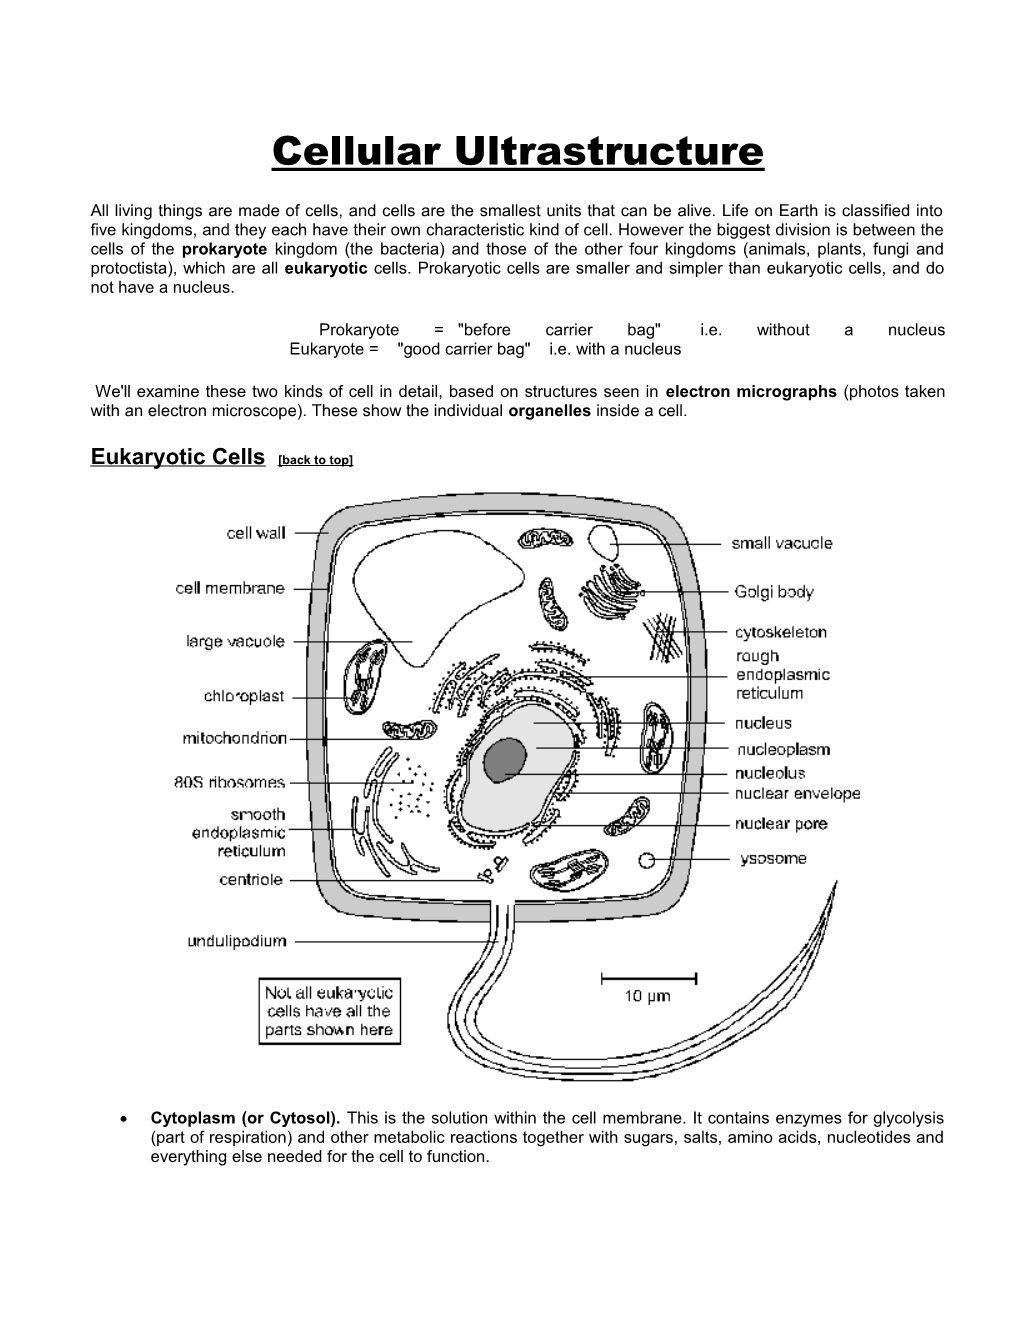 Cellular Ultrastructure